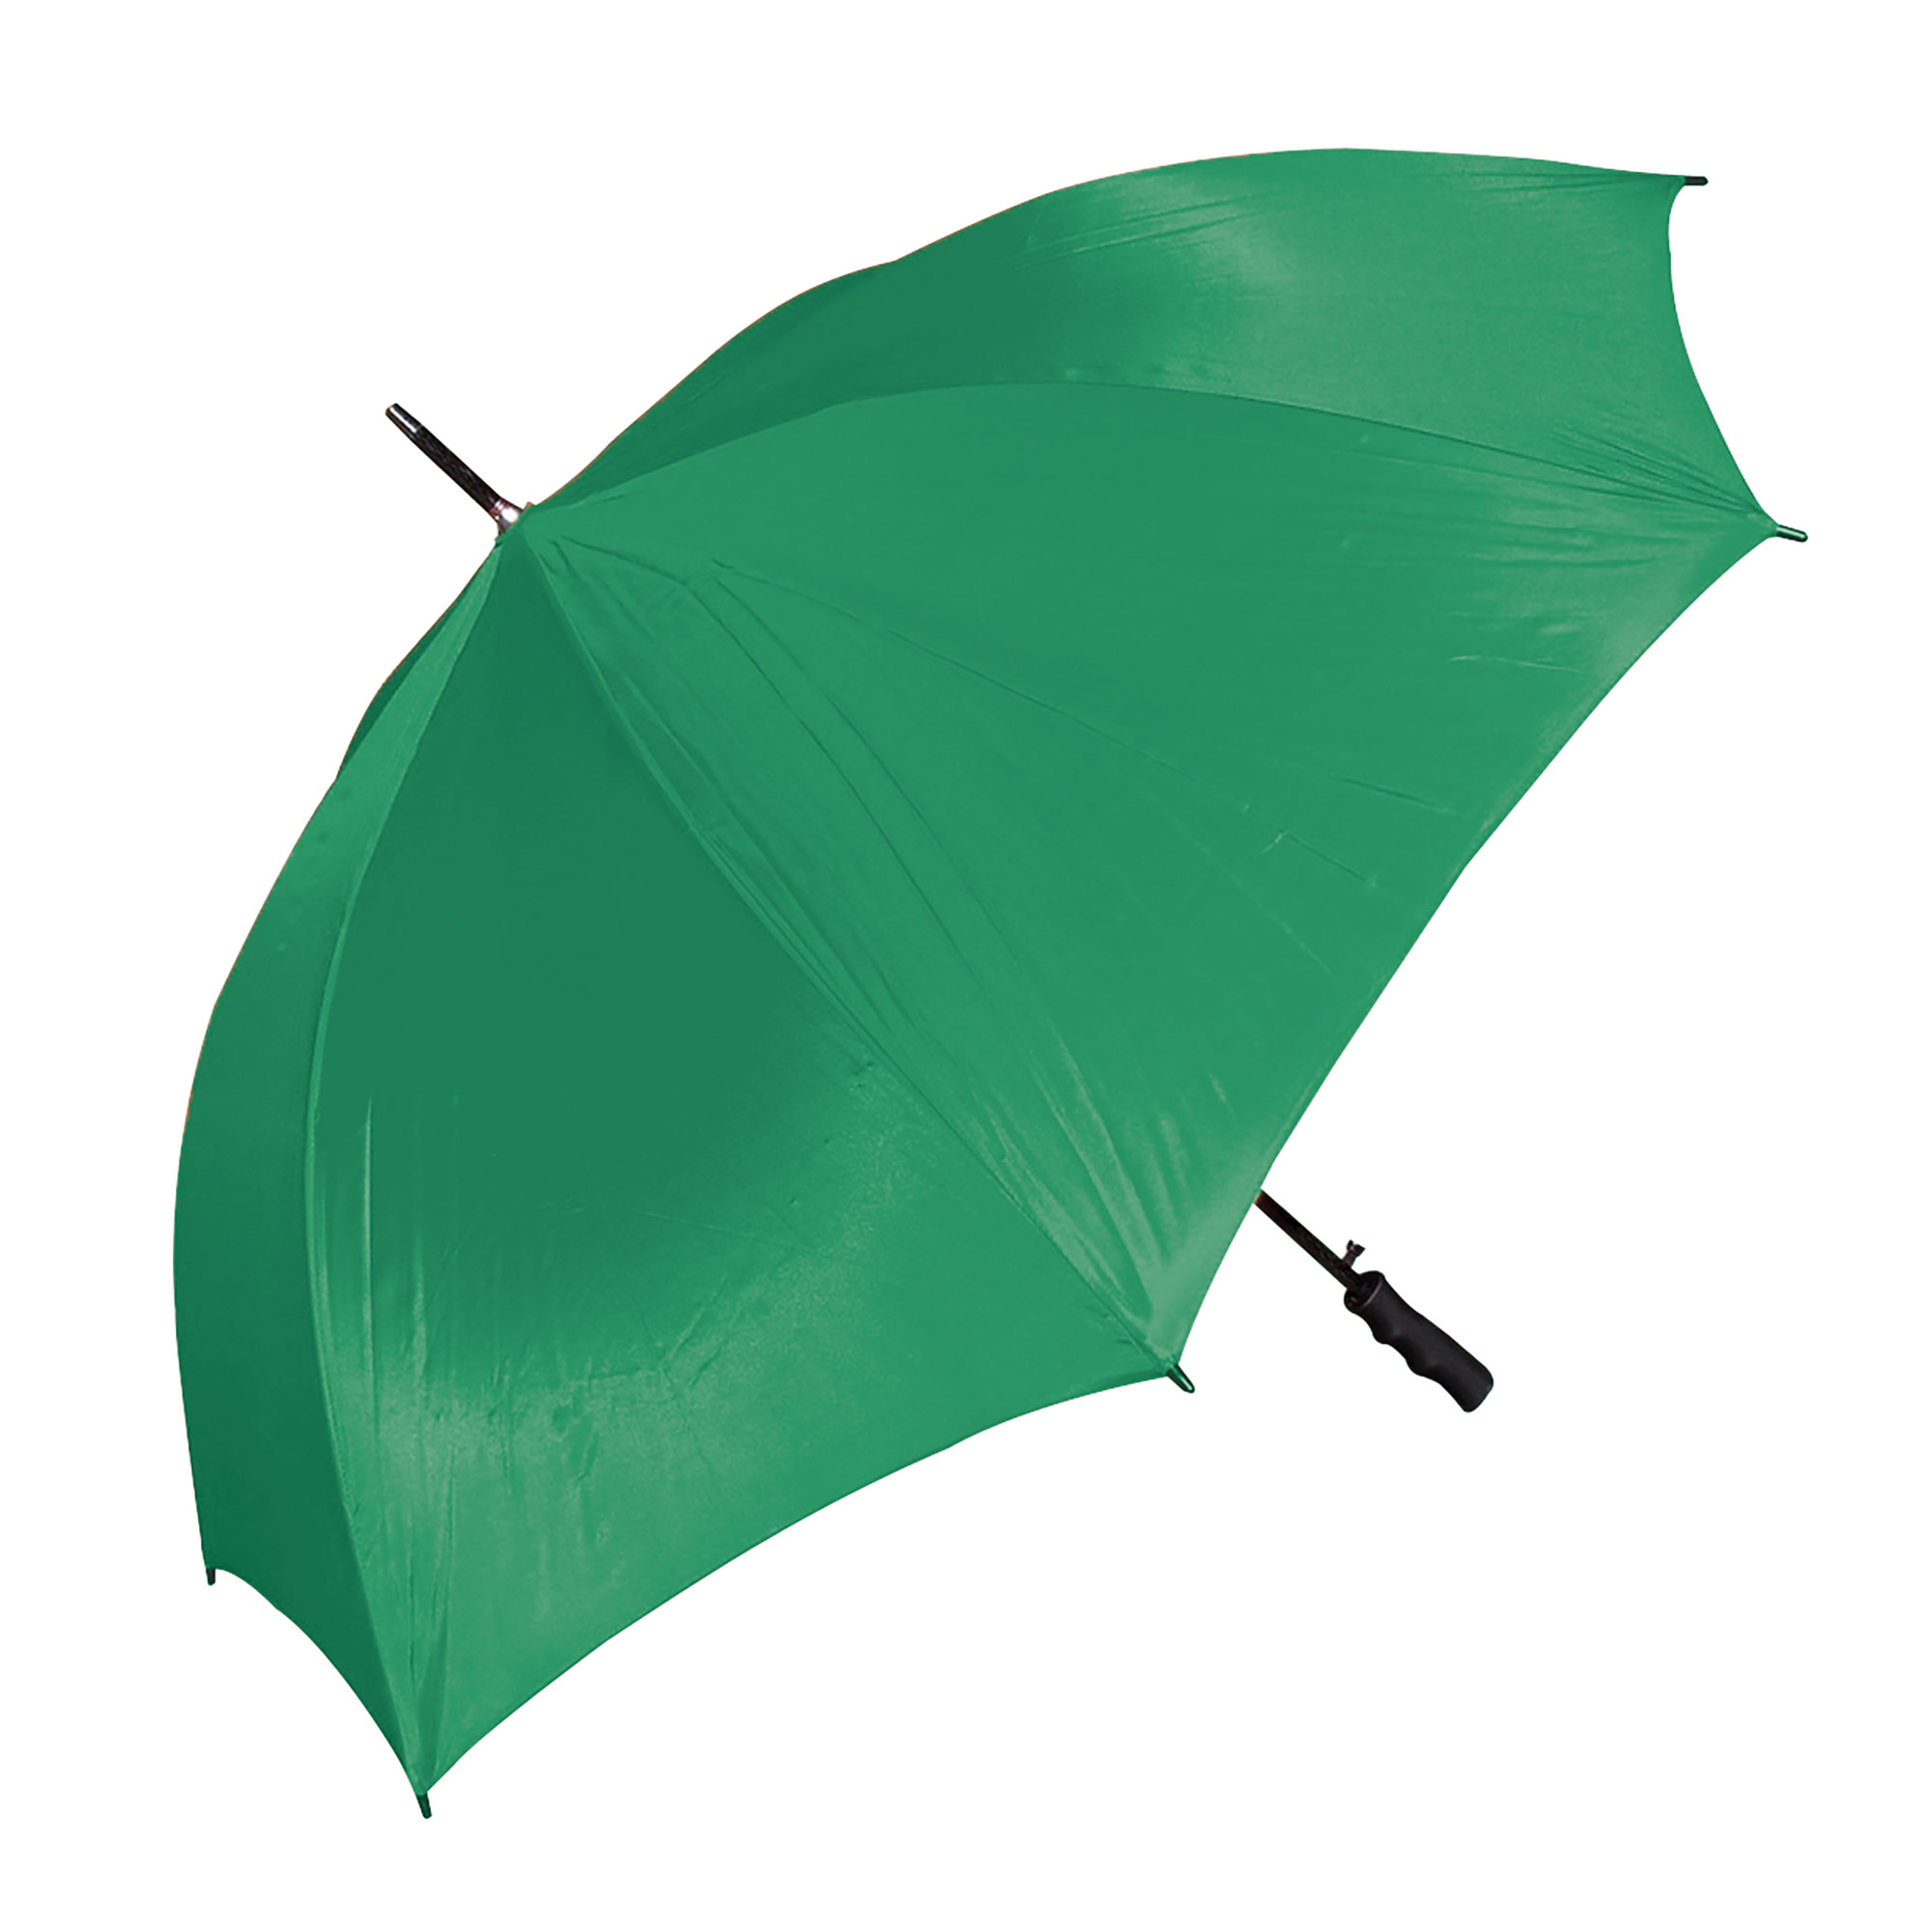 Bulk Promotional Dark Green Sands Umbrella Online In Perth Australia